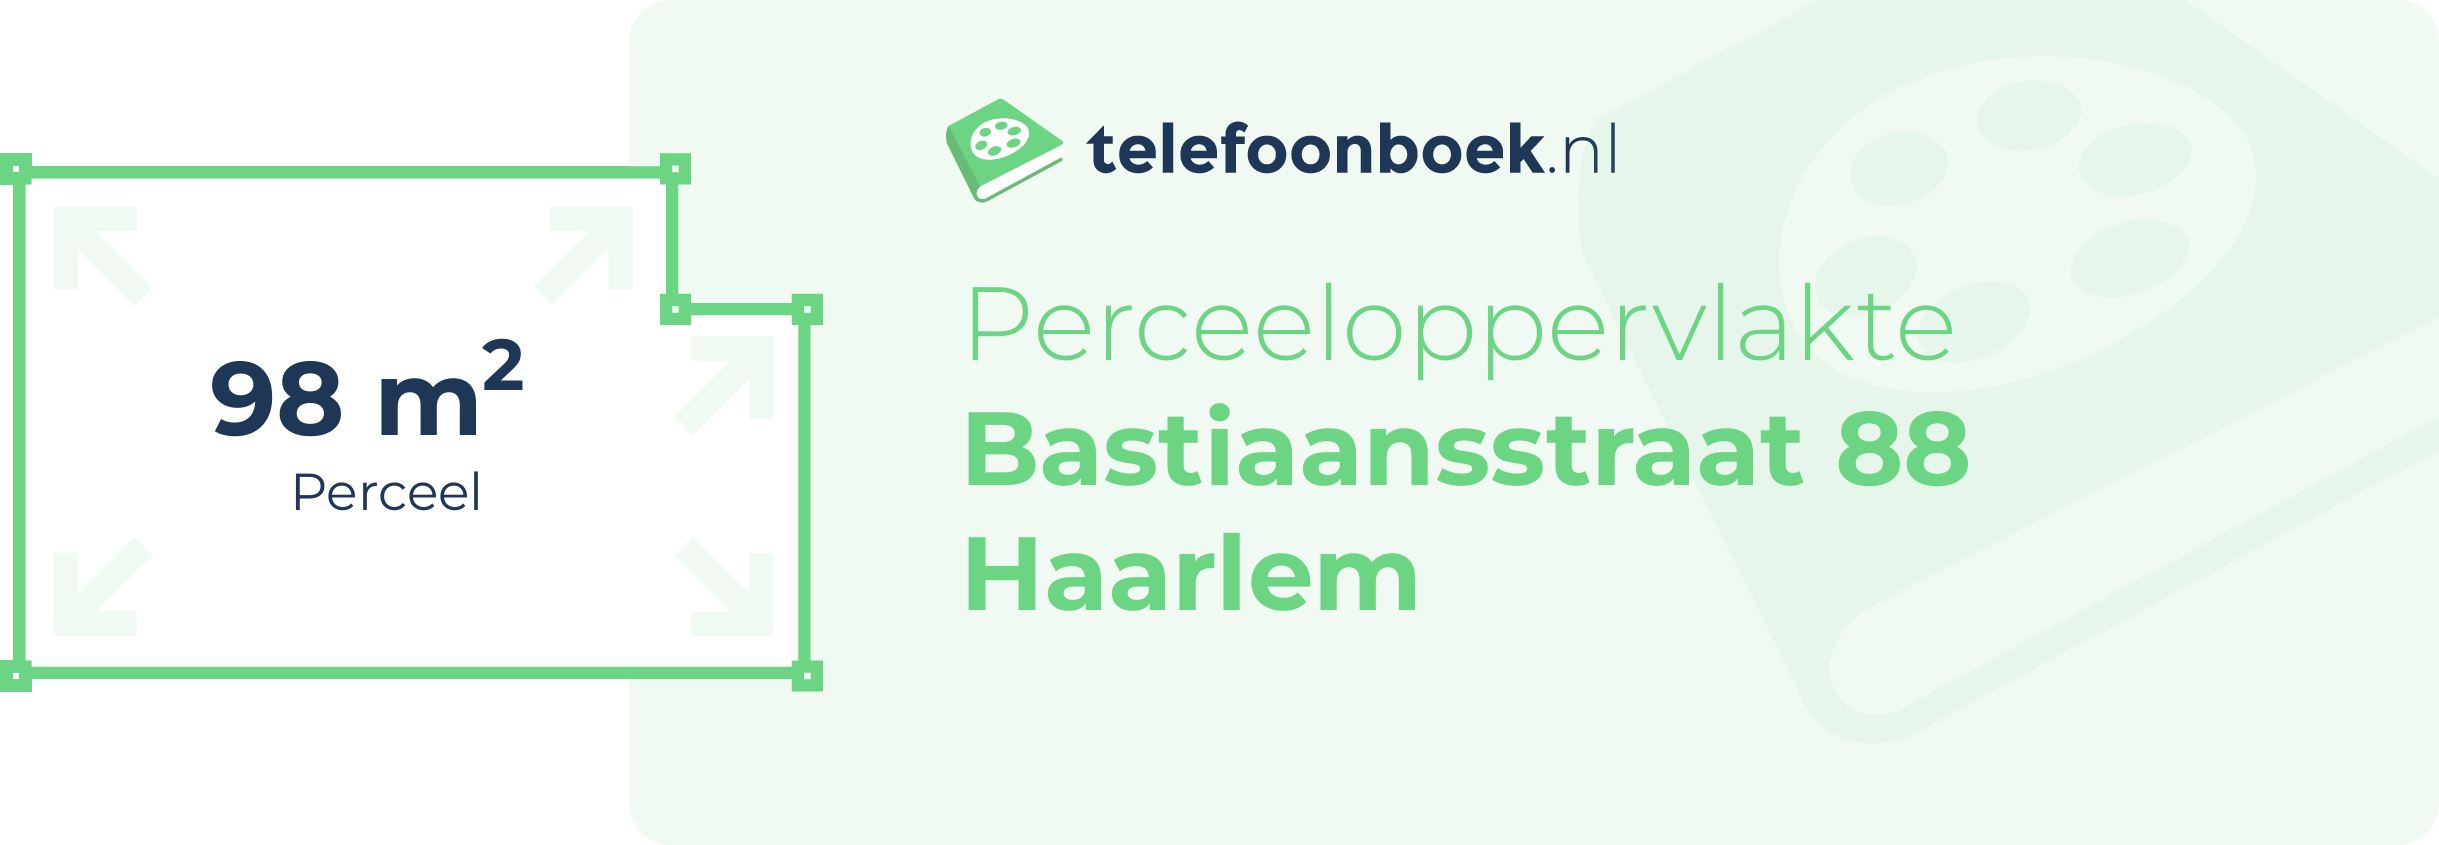 Perceeloppervlakte Bastiaansstraat 88 Haarlem